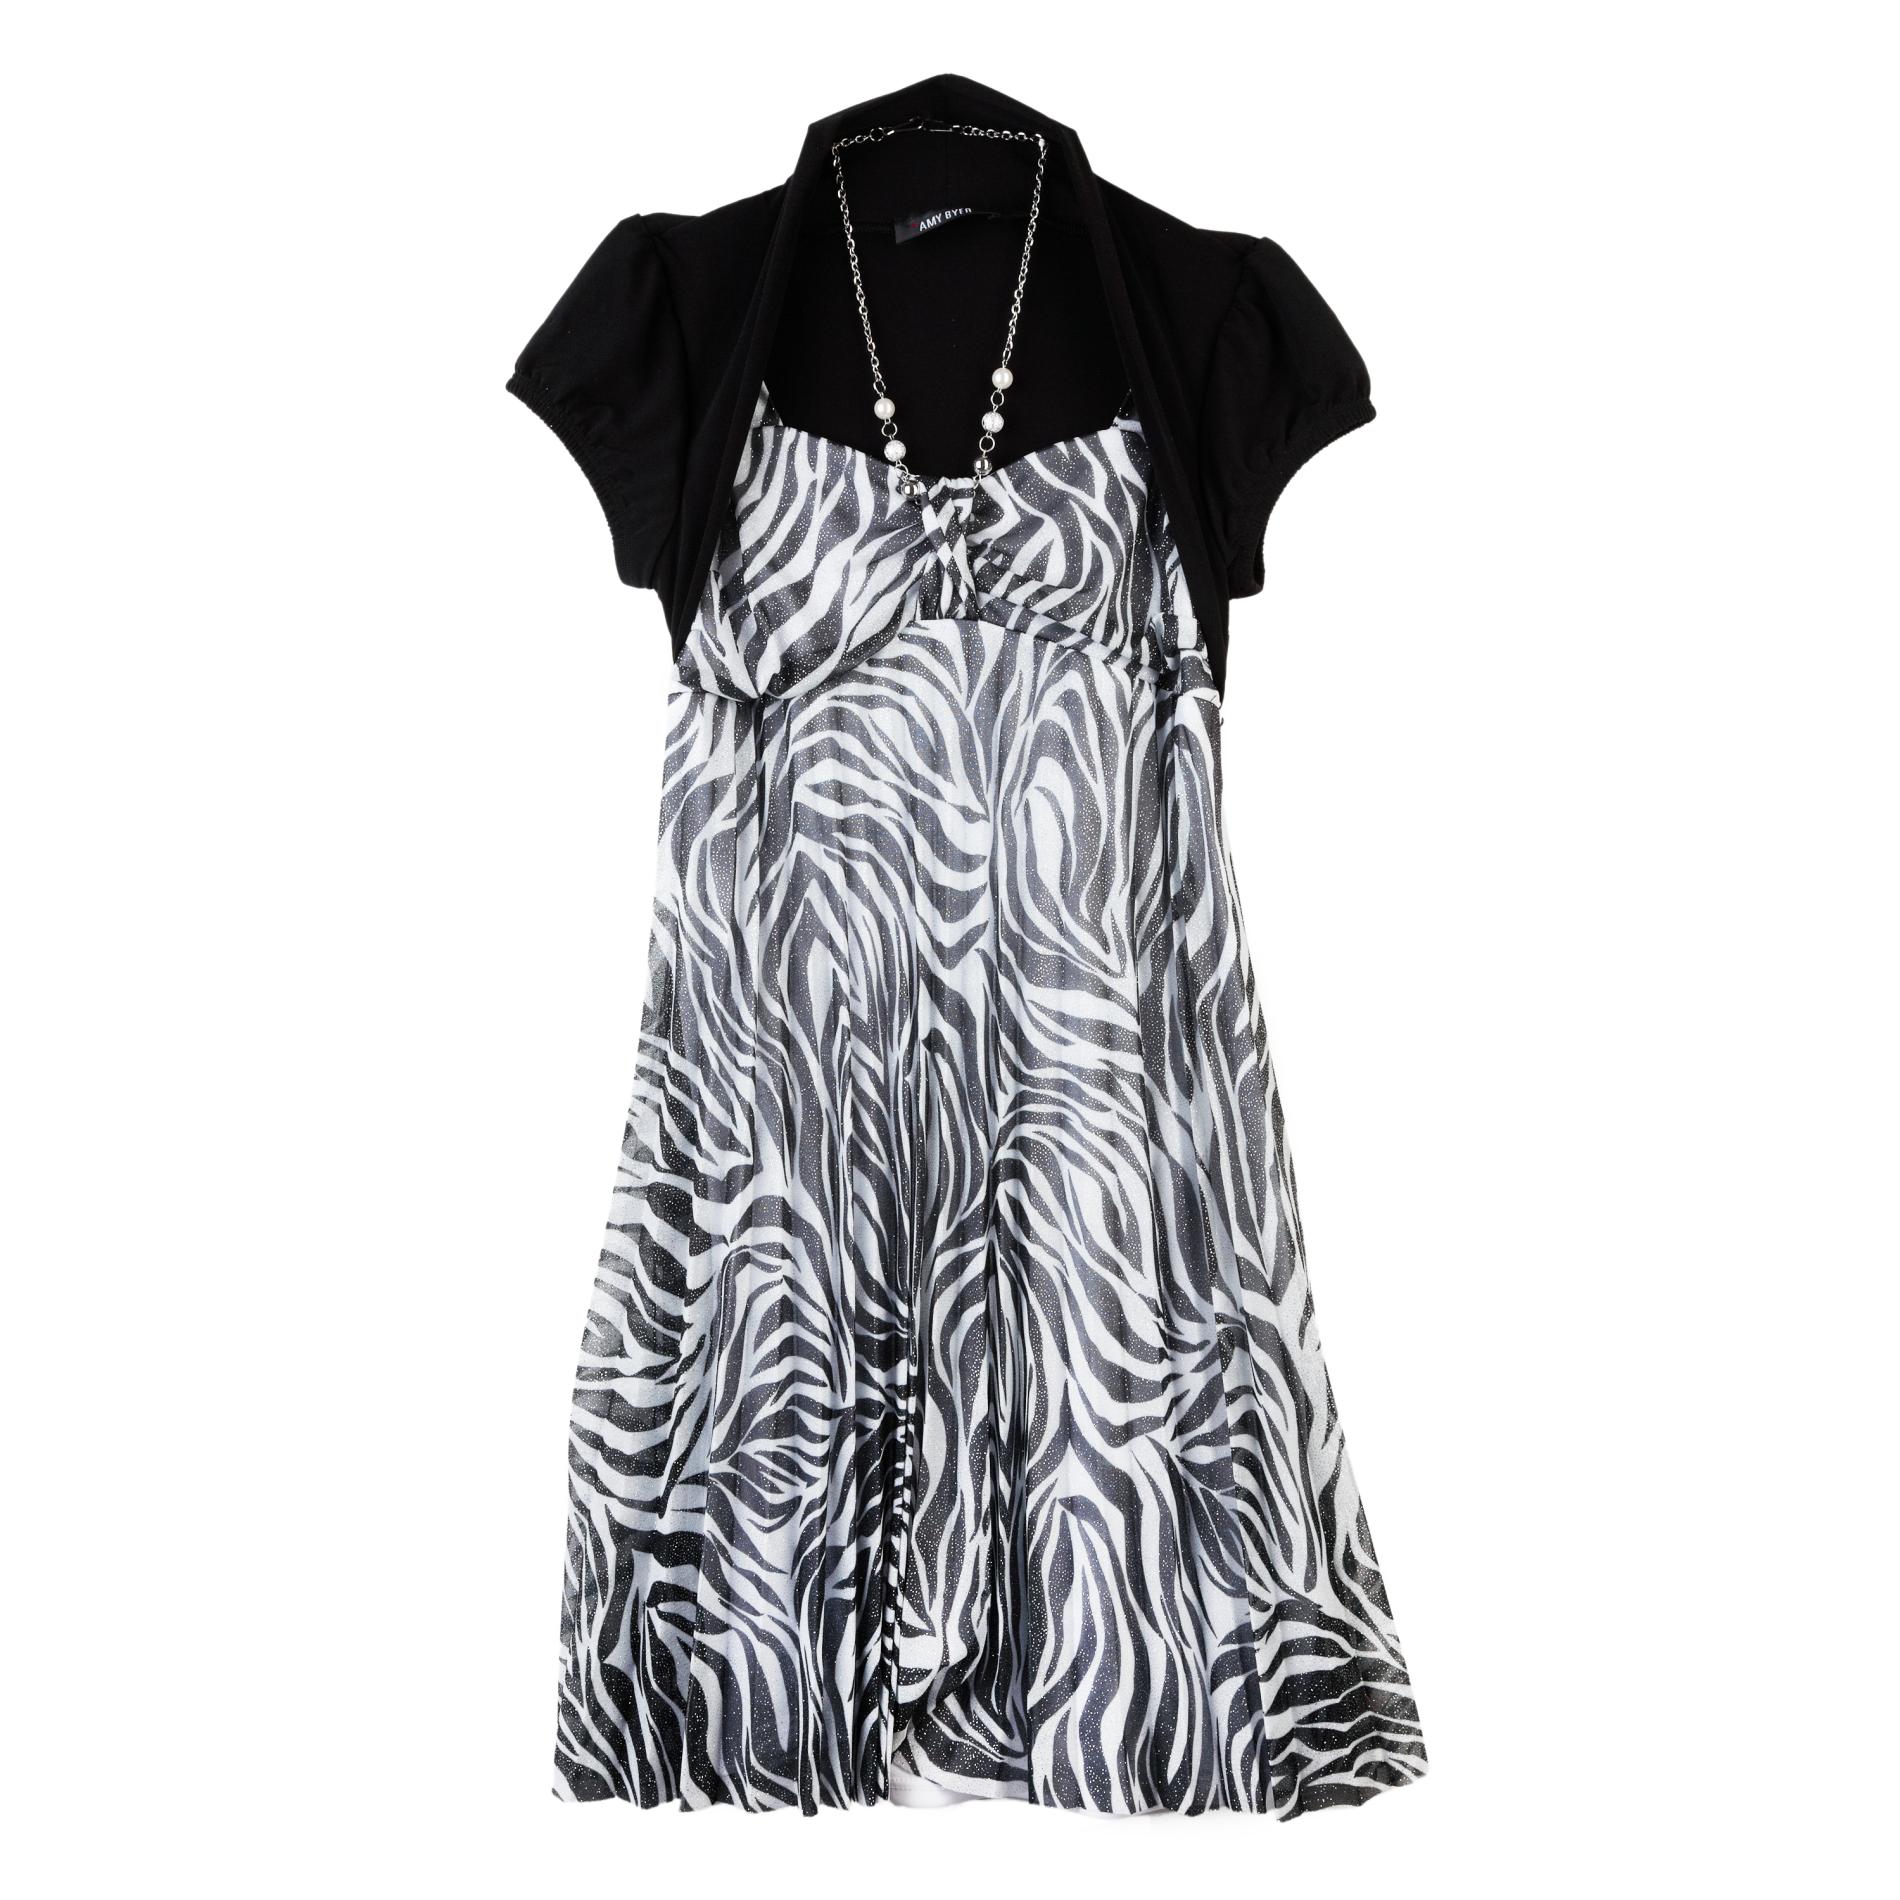 Amy's Closet Girl's Party Dress & Necklace- Zebra Print